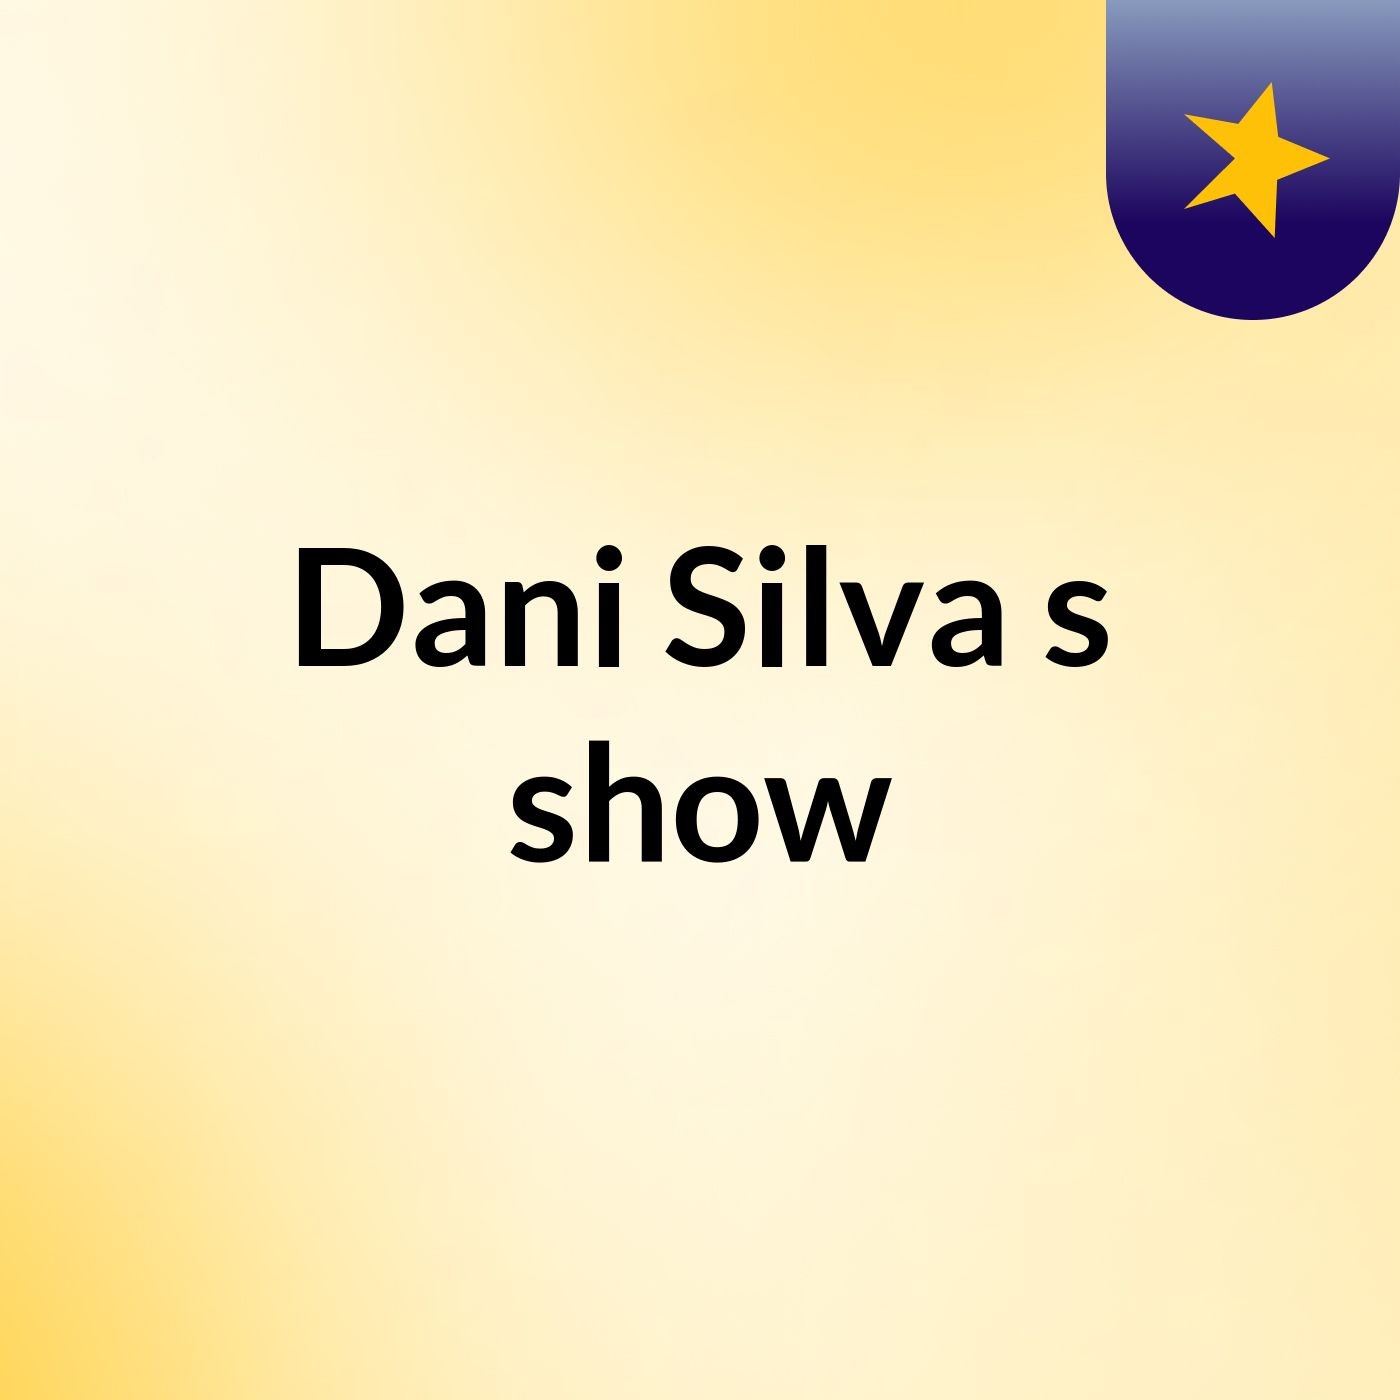 Dani Silva's show